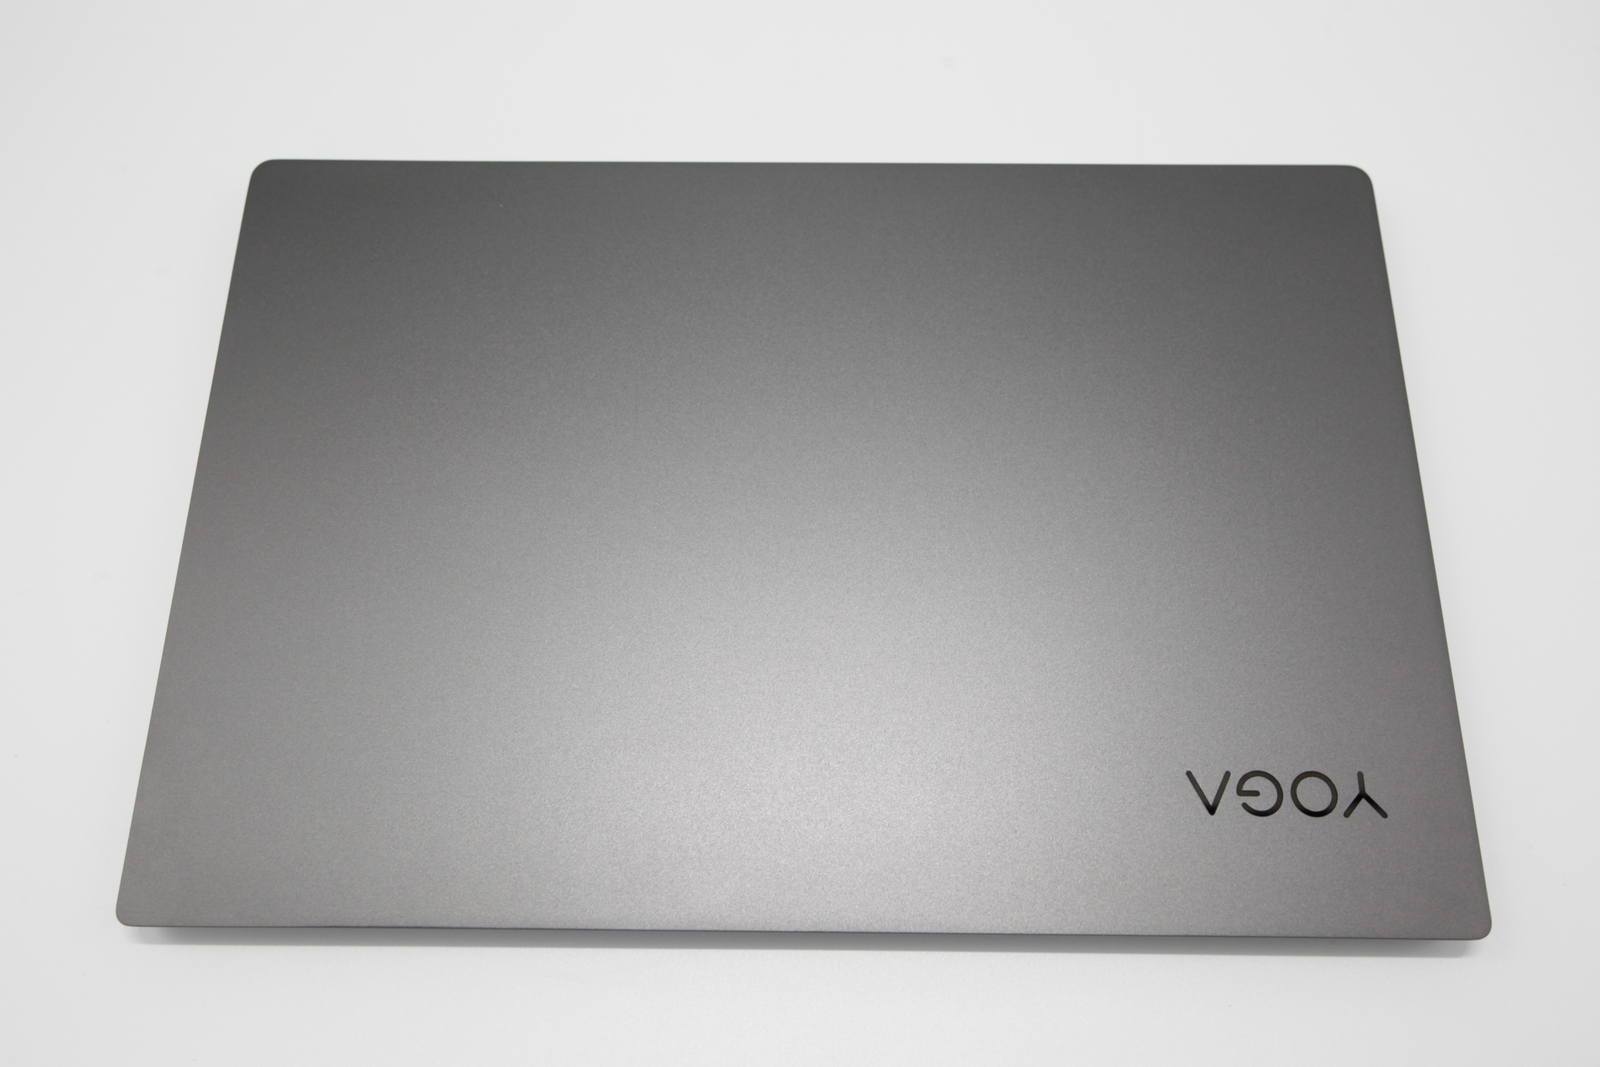 Lenovo Yoga S730 13.3" Laptop: 8th Gen i5, 256GB SSD, 8GB RAM, Warranty, 1.1Kg - CruiseTech